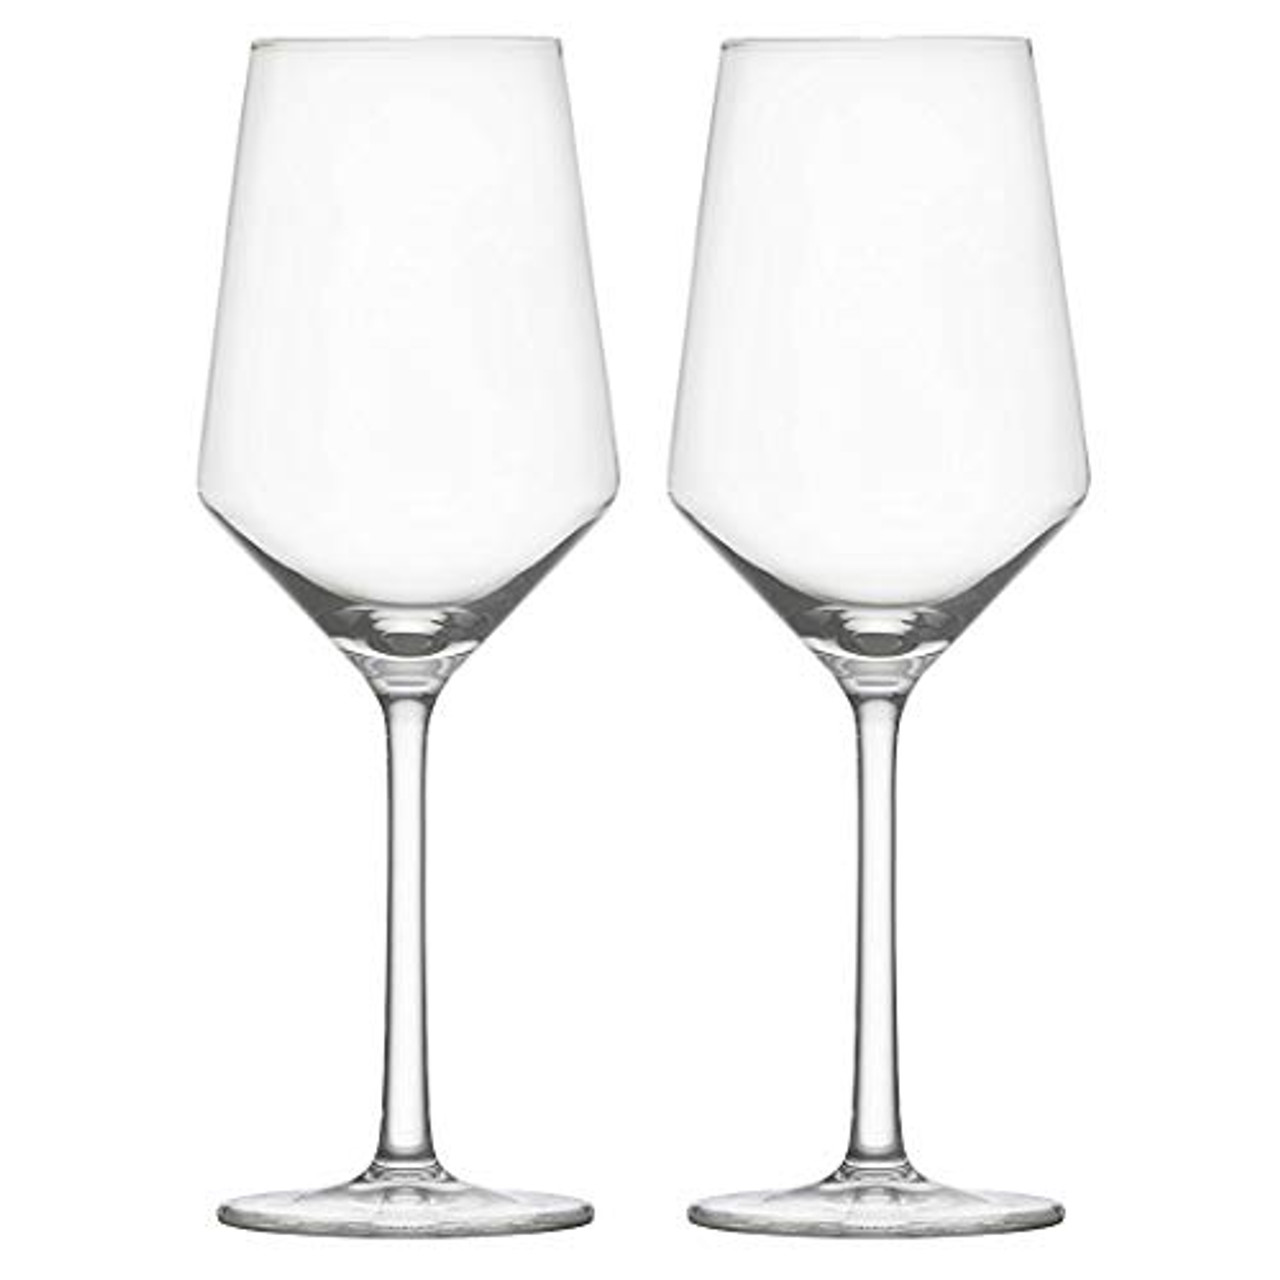 beautiful glasses  Colored wine glasses, Red wine glasses, Wine